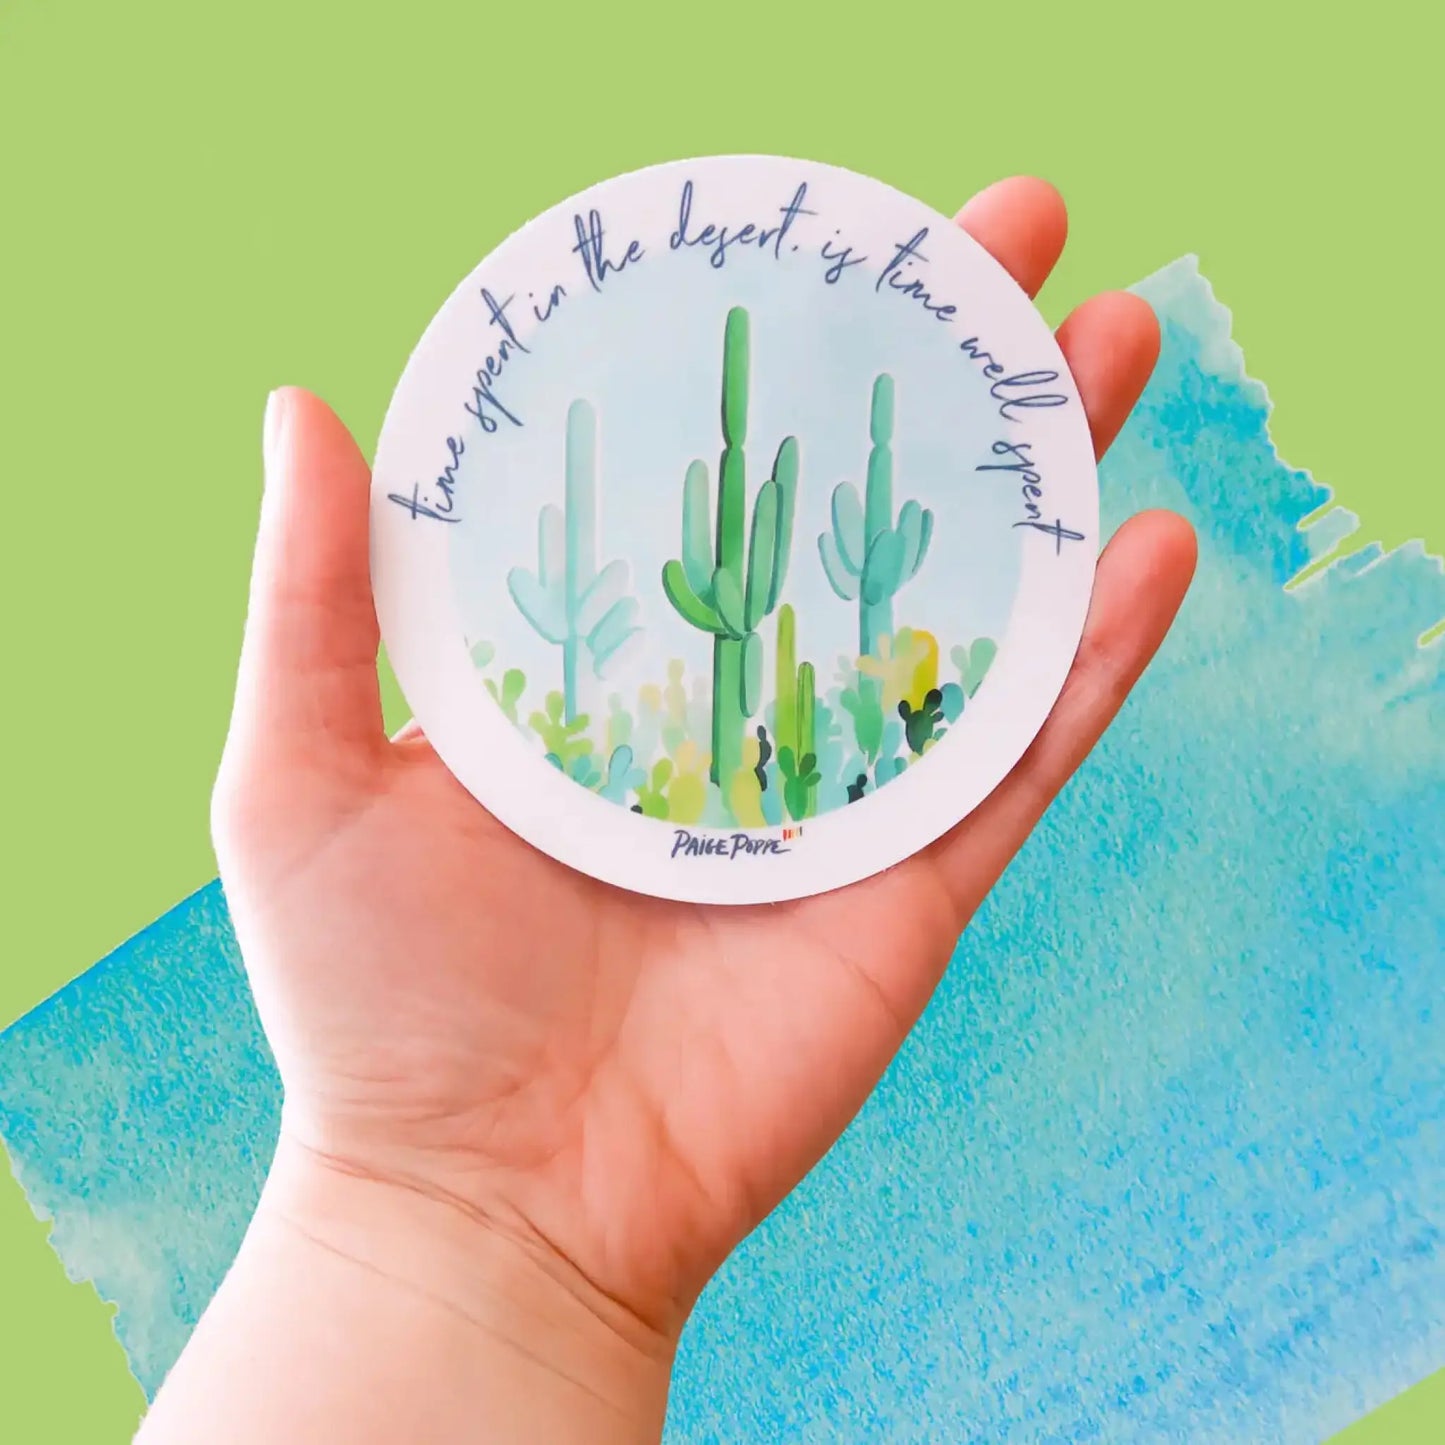 Time Spent in the Desert sticker - Sticker